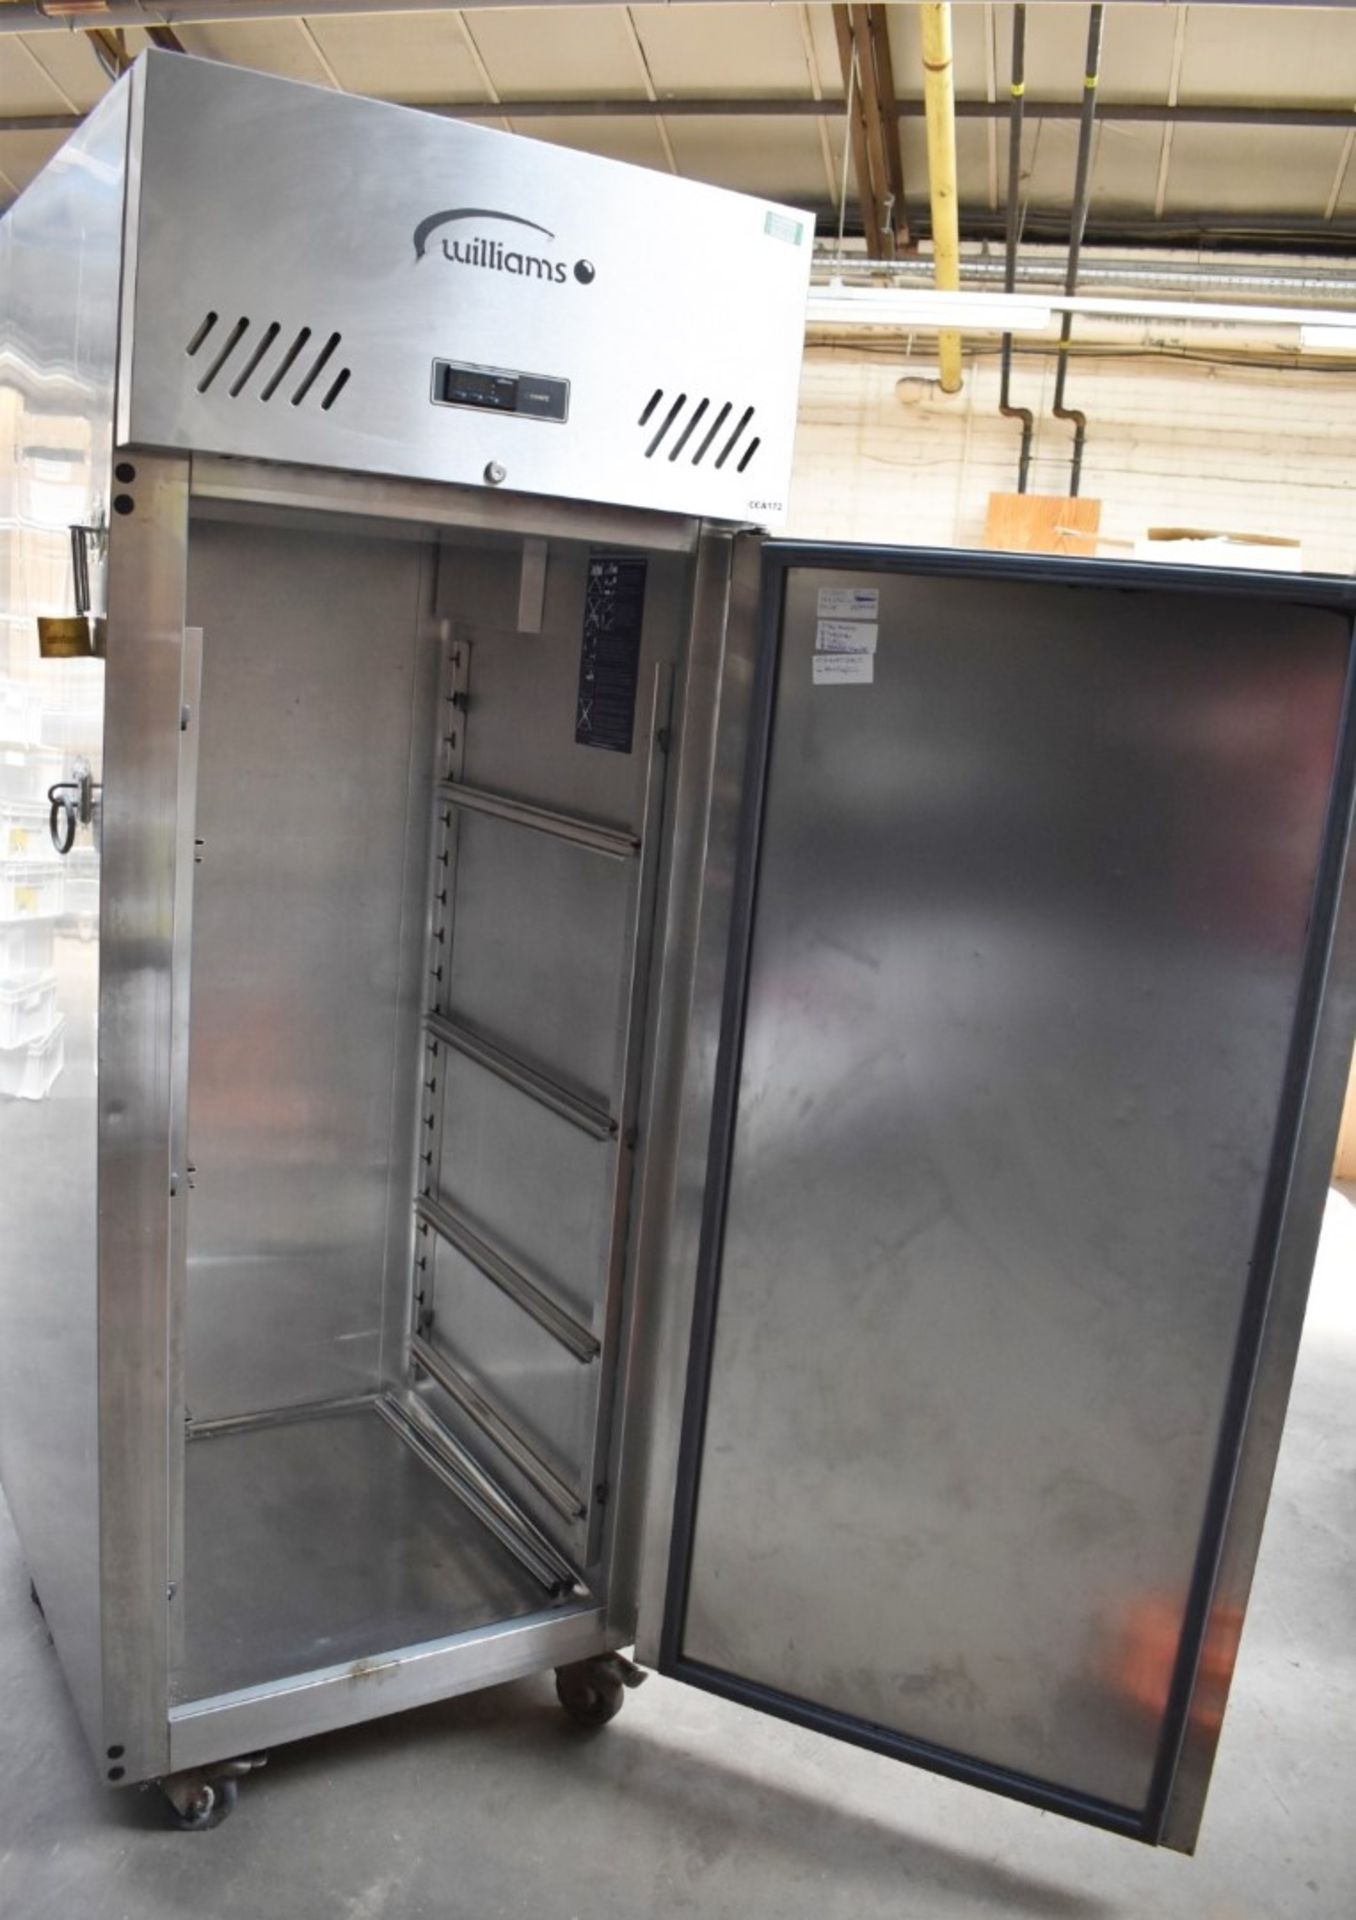 1 x Williams Jade Upright Single Door Refrigerator With Stainless Steel Exterior - Model HJ1TSA - - Image 6 of 11